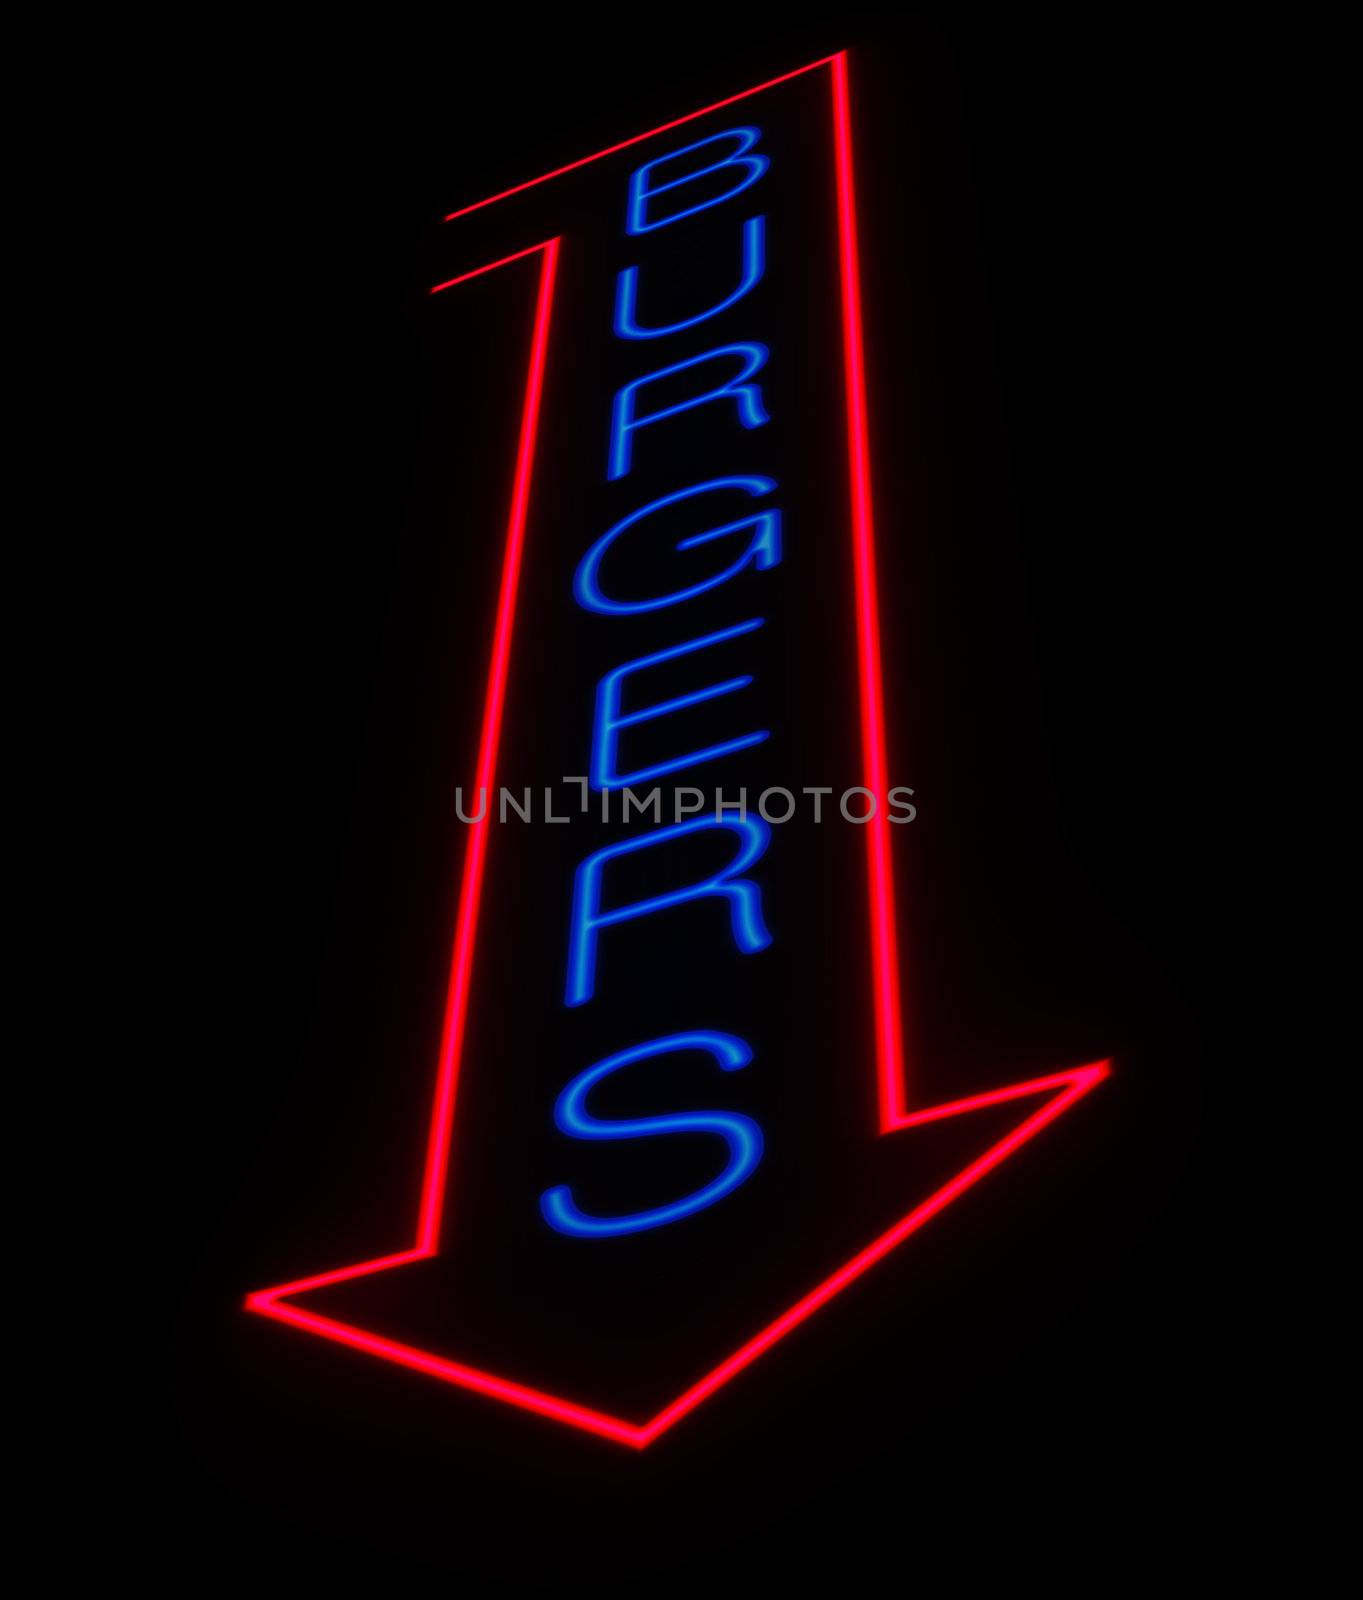 Illustration depicting an illuminated neon burgers sign.